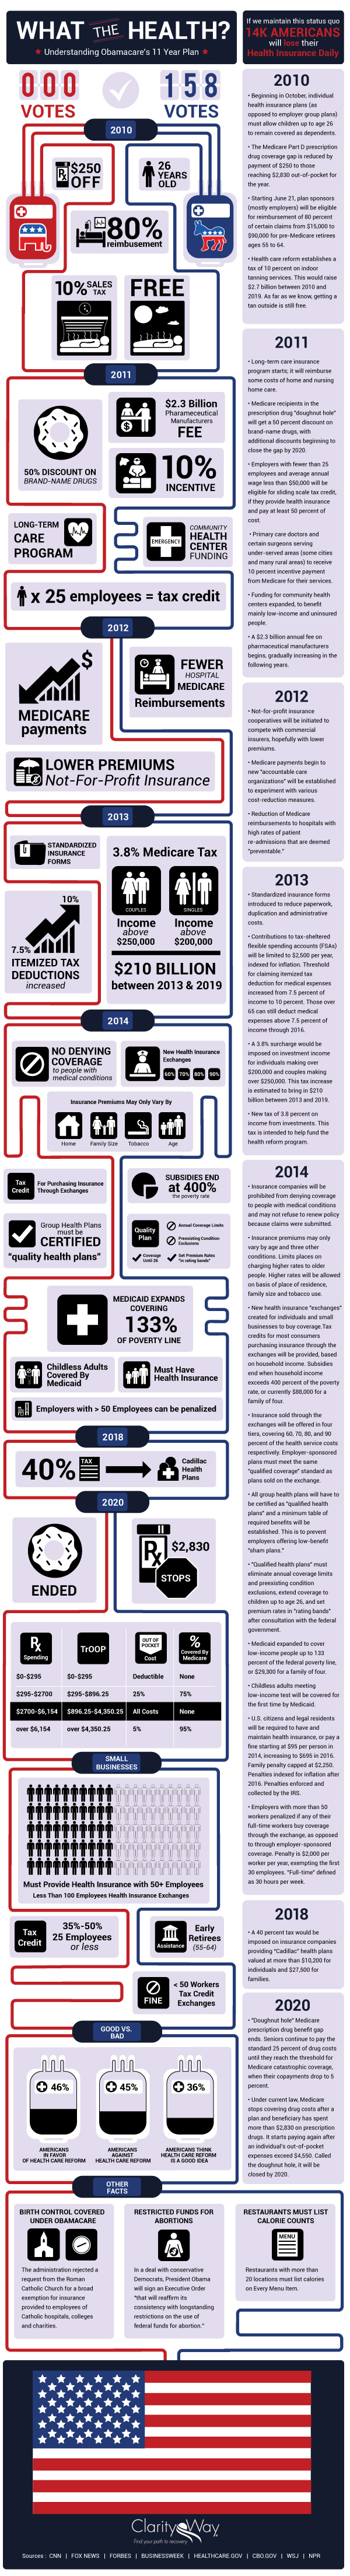 Obama care -infographic